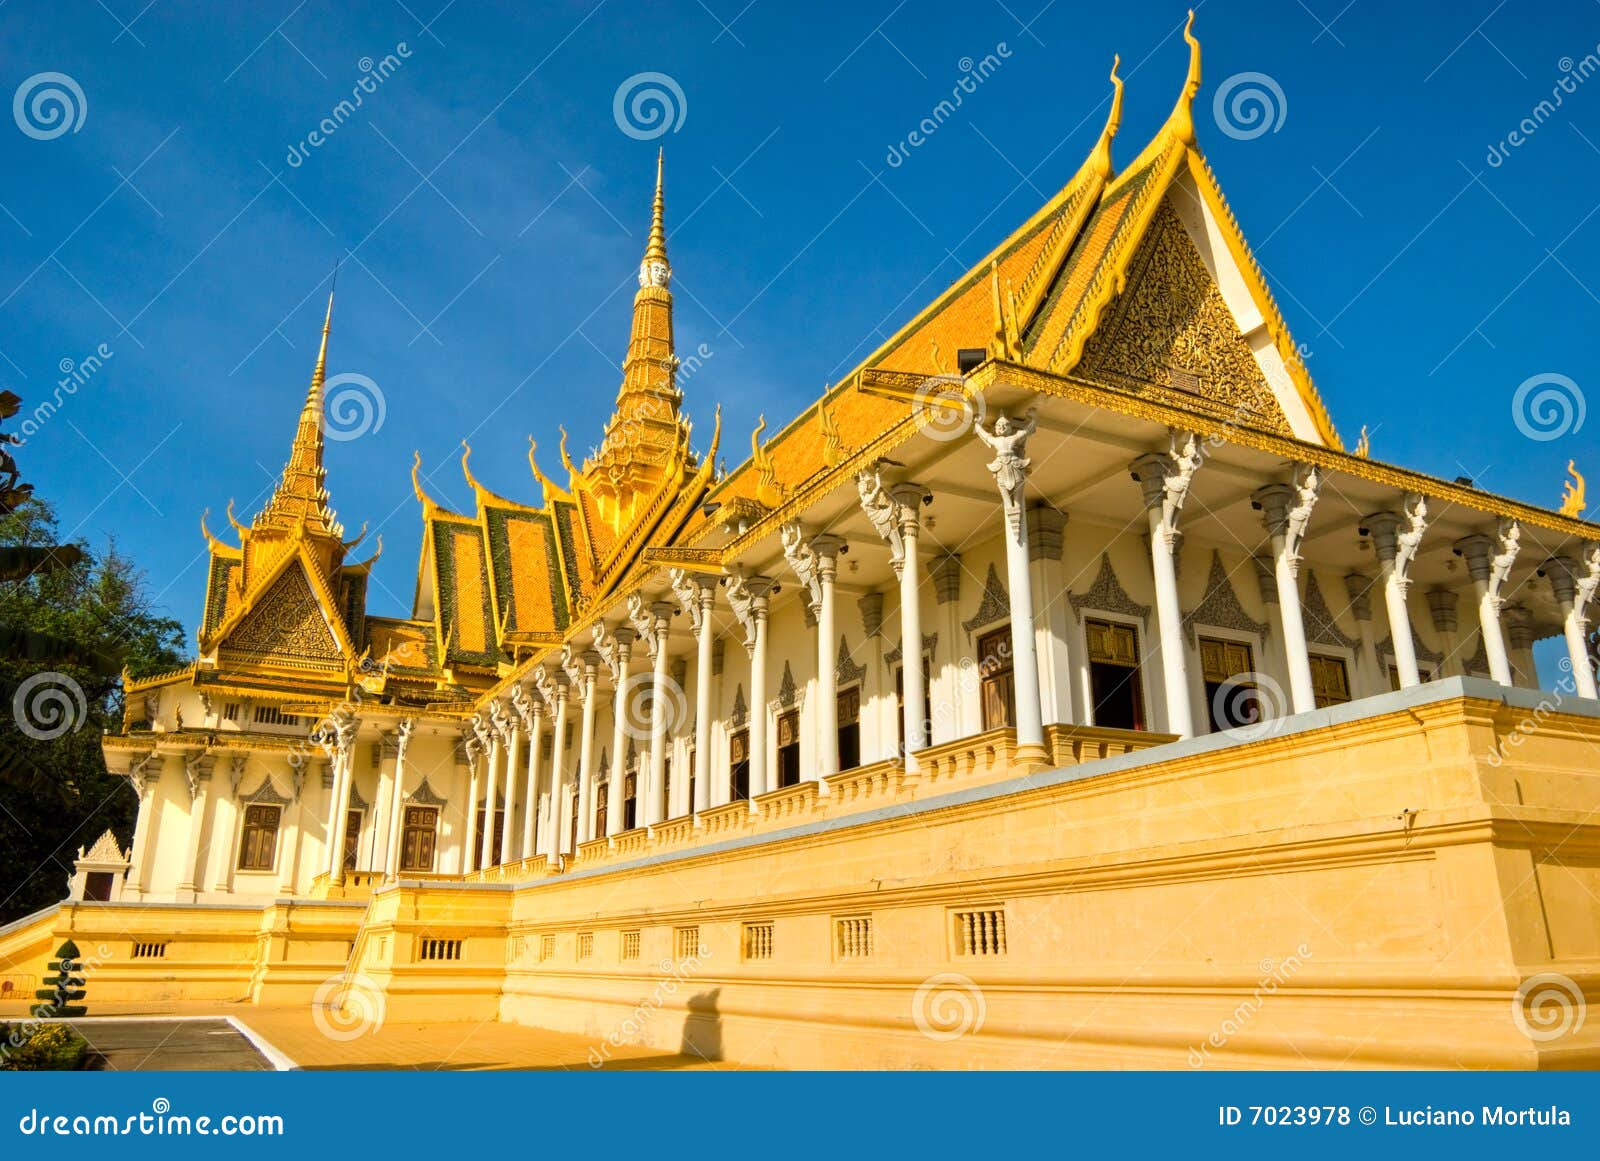 Königlicher Palast in Pnom Penh, Kambodscha. Königlicher Palast in Pnom Penh vor Sonnenuntergang, Kambodscha.